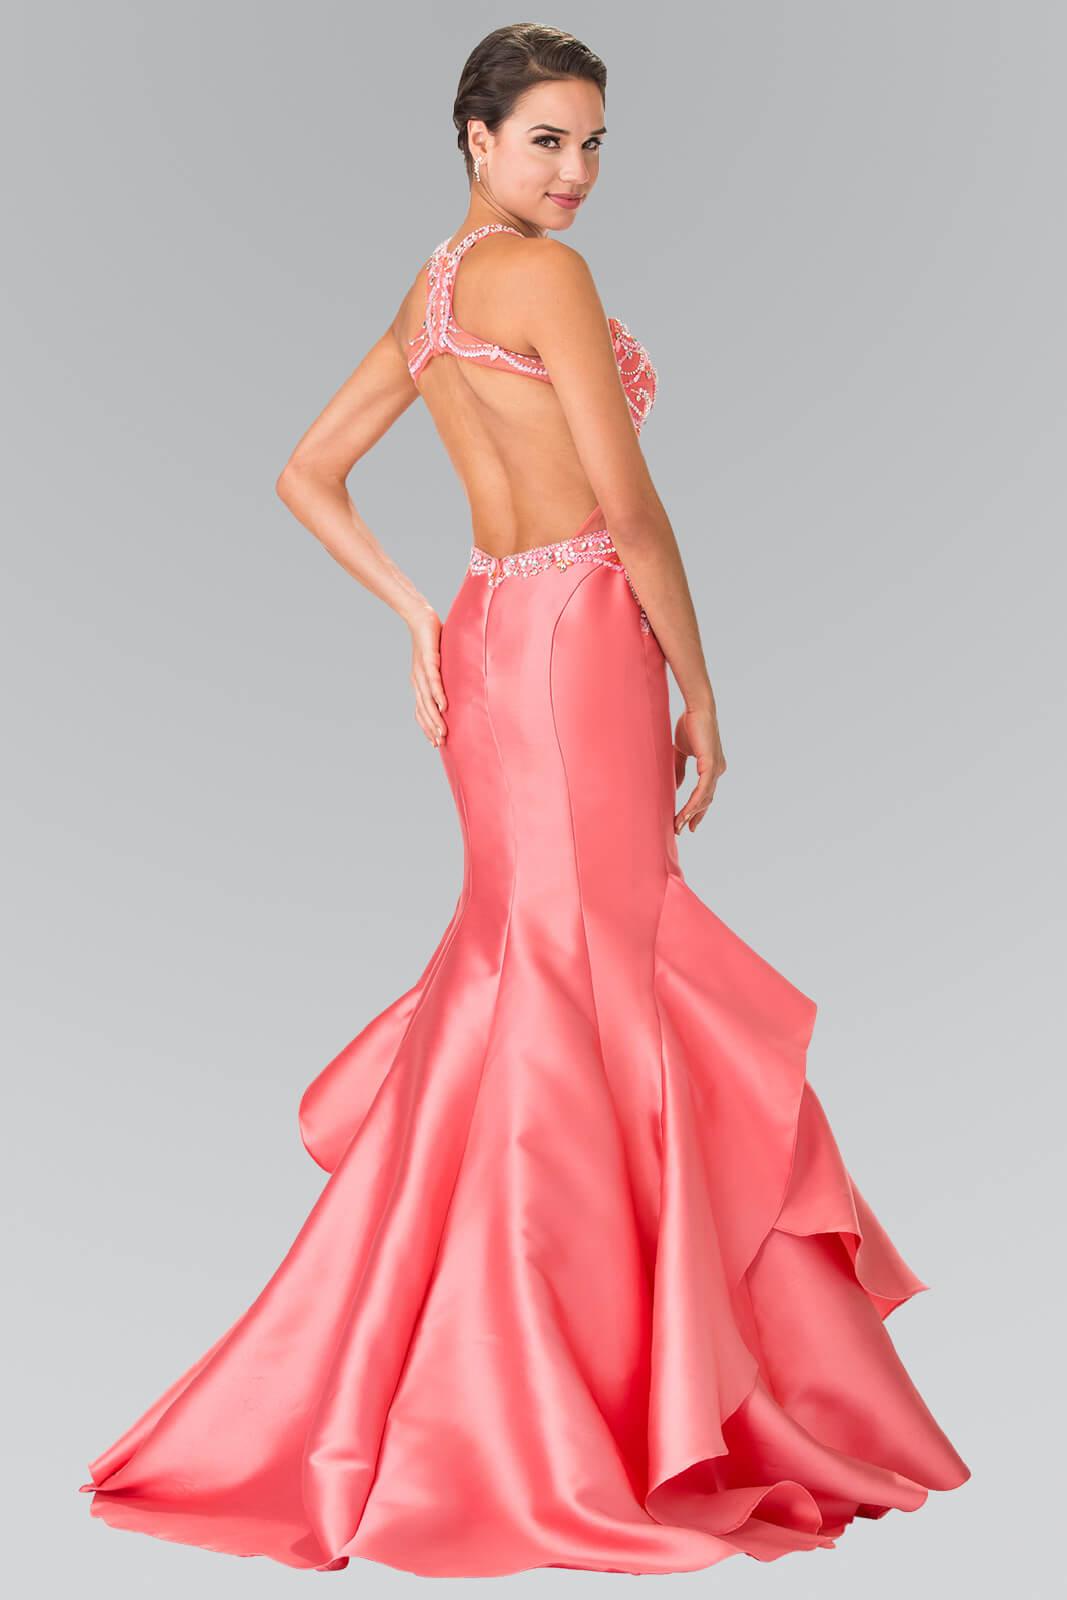 Prom Long Formal Halter Dress Mermaid Gown - The Dress Outlet Elizabeth K